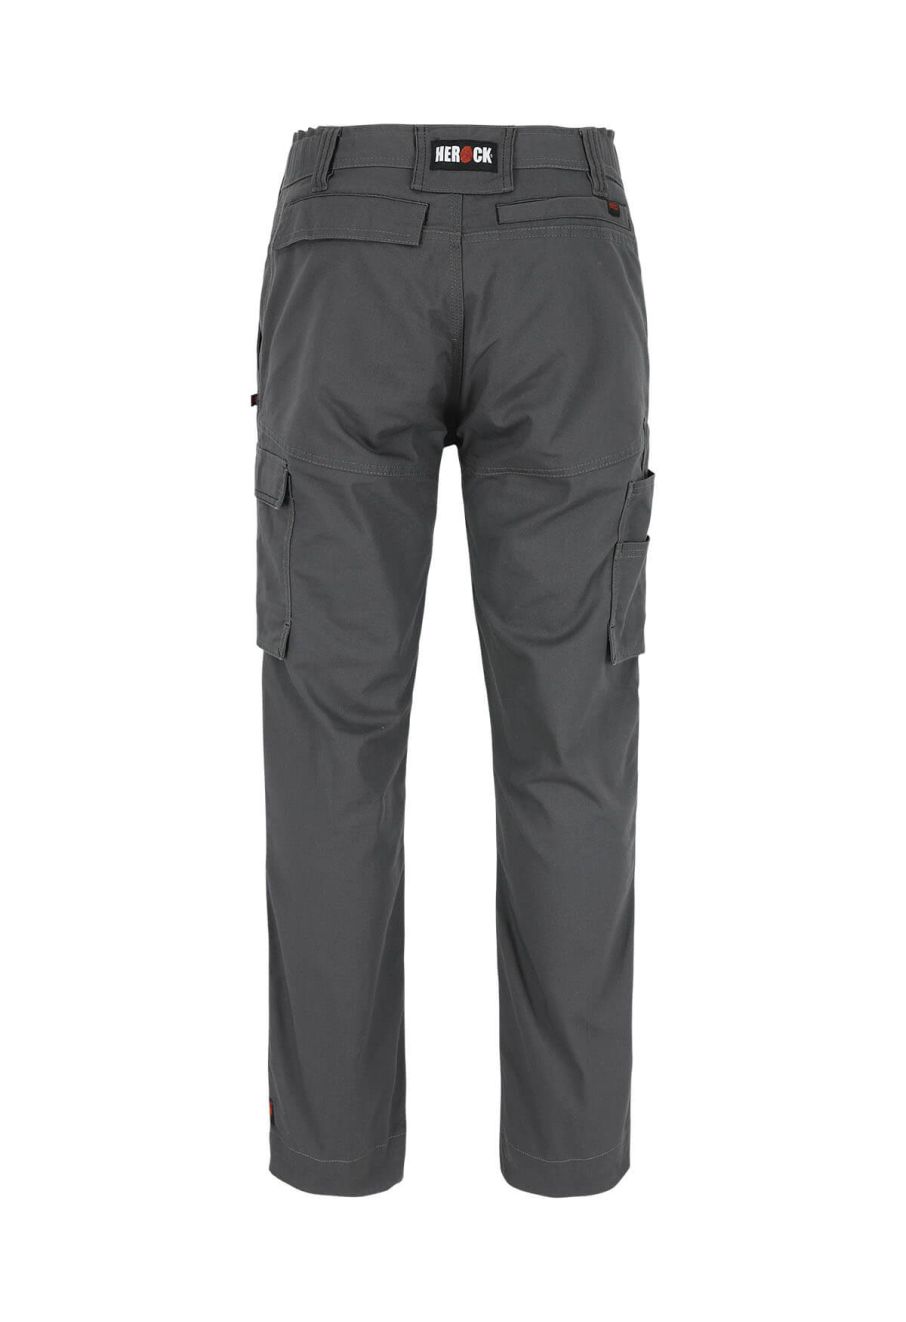 Multi Functional and Hardwearing Cargo Multi Pocket Work Trousers with YKK  Zip | eBay